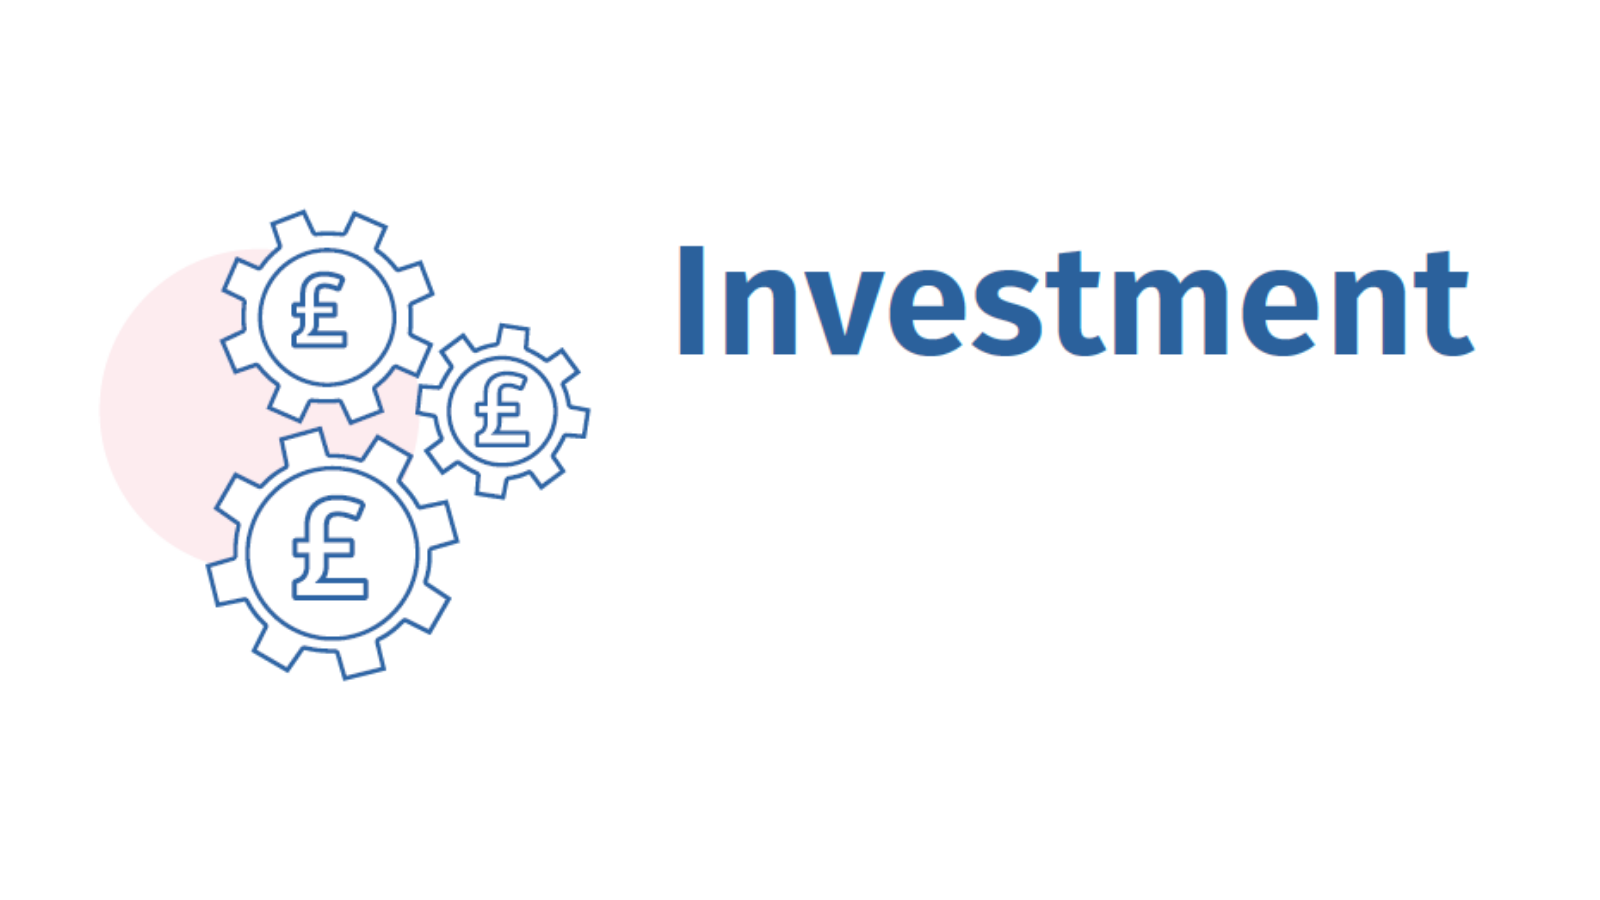 Investment illustration